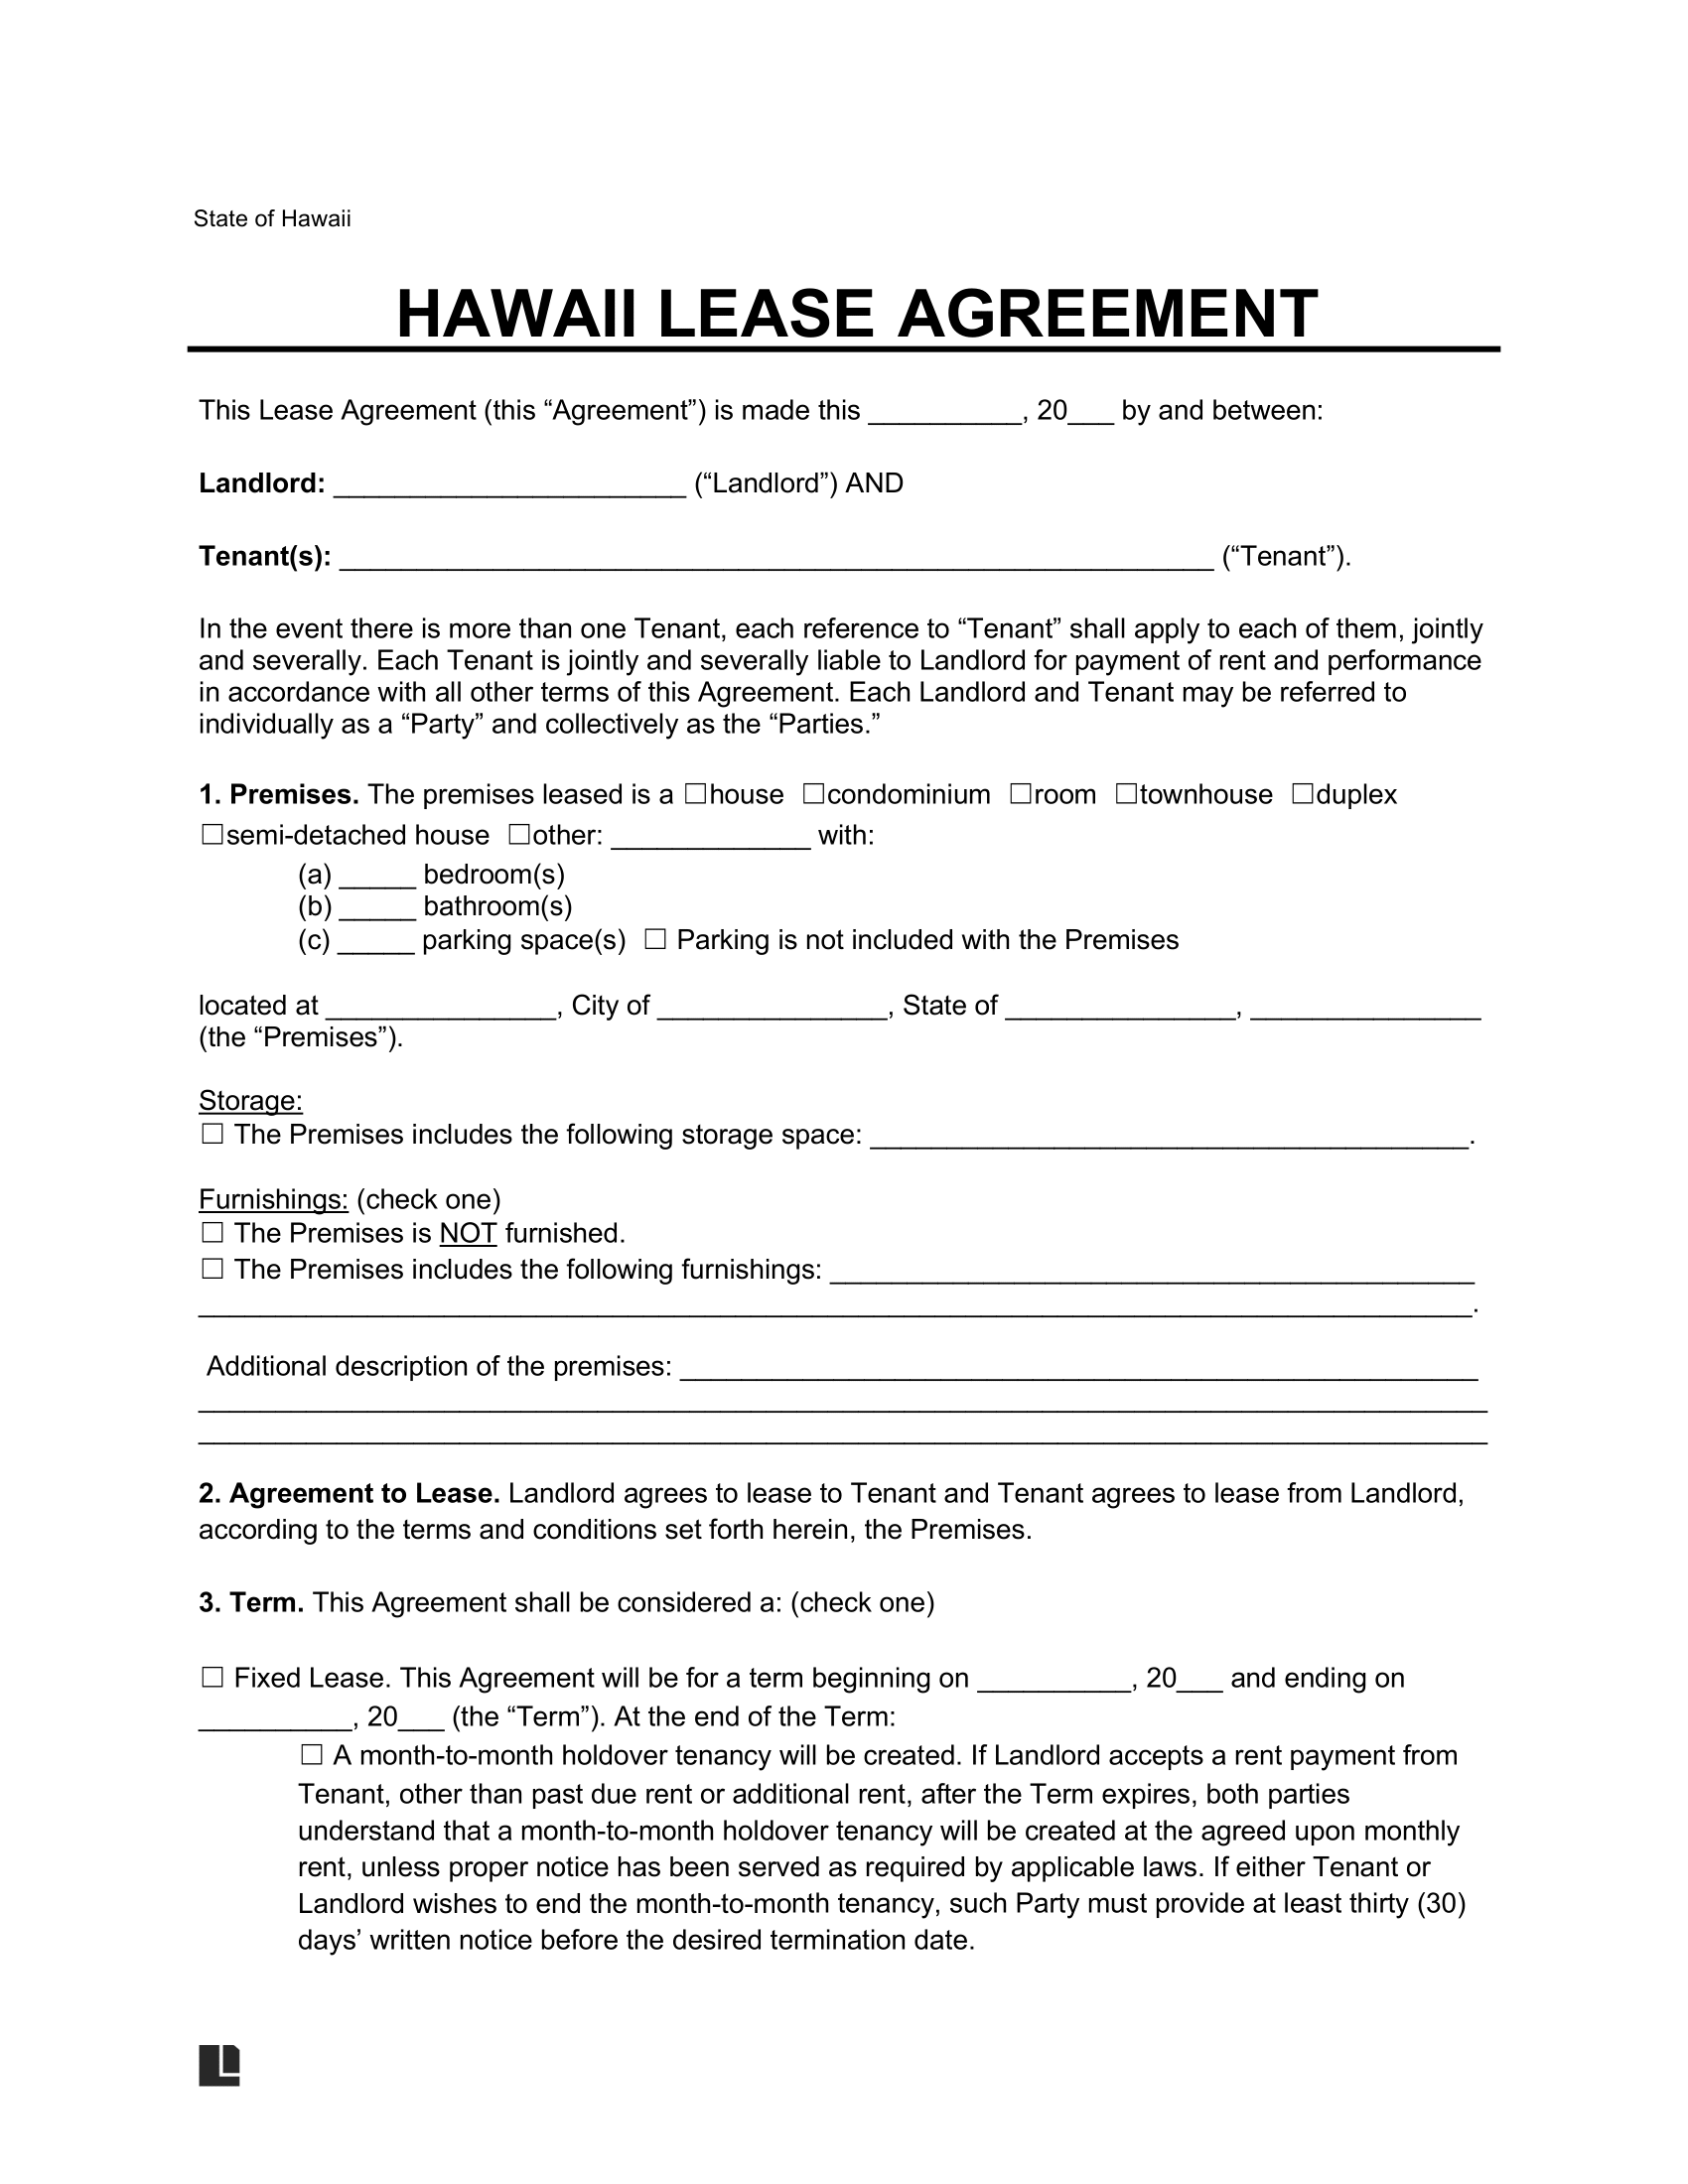 Hawaii Lease Agreement Template